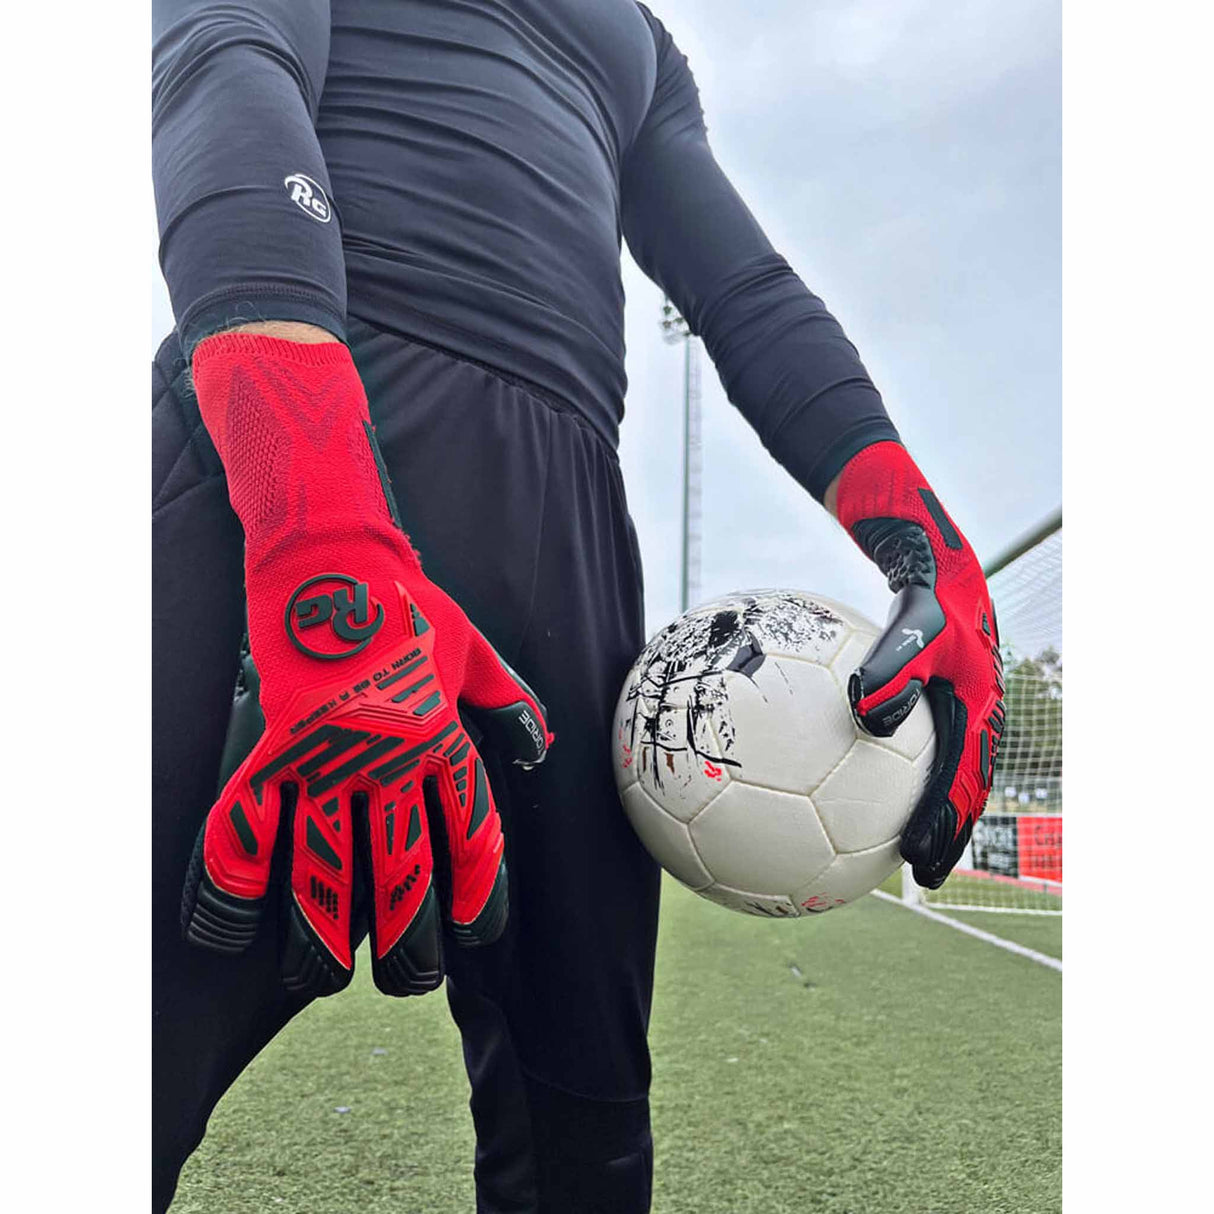 RG Goalkeeper Gloves Toride Gants de gardien de but de soccer - Rouge / Noir